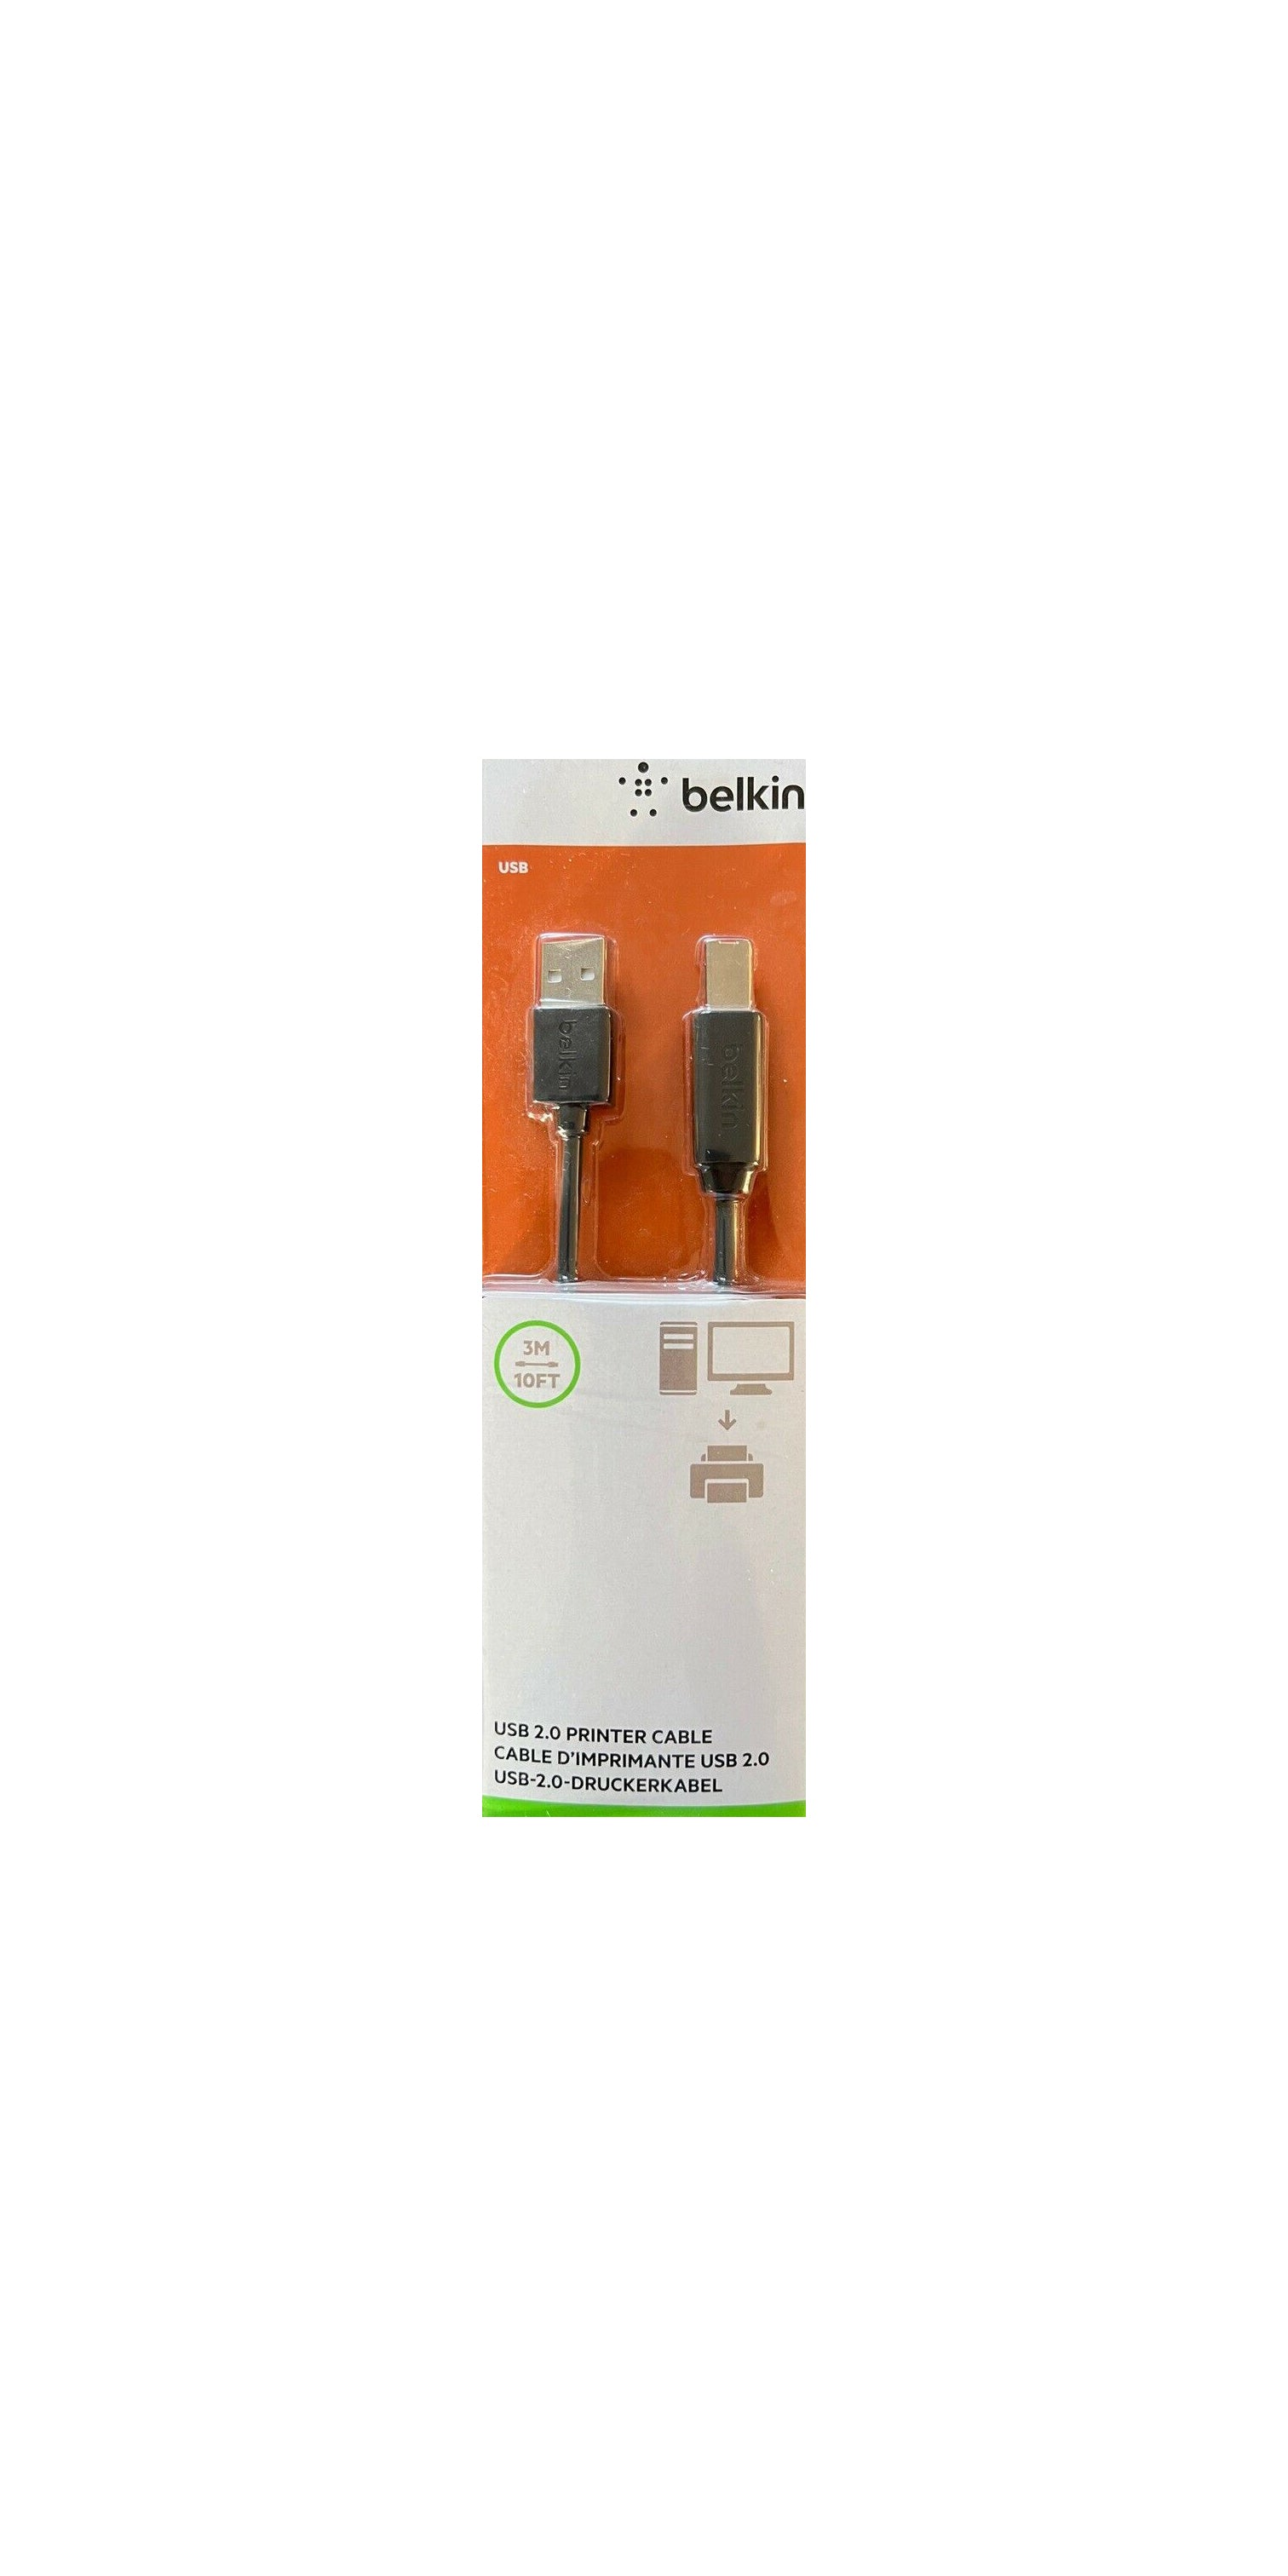 Belkin USB 2.0 Printer Cable 3 Meter